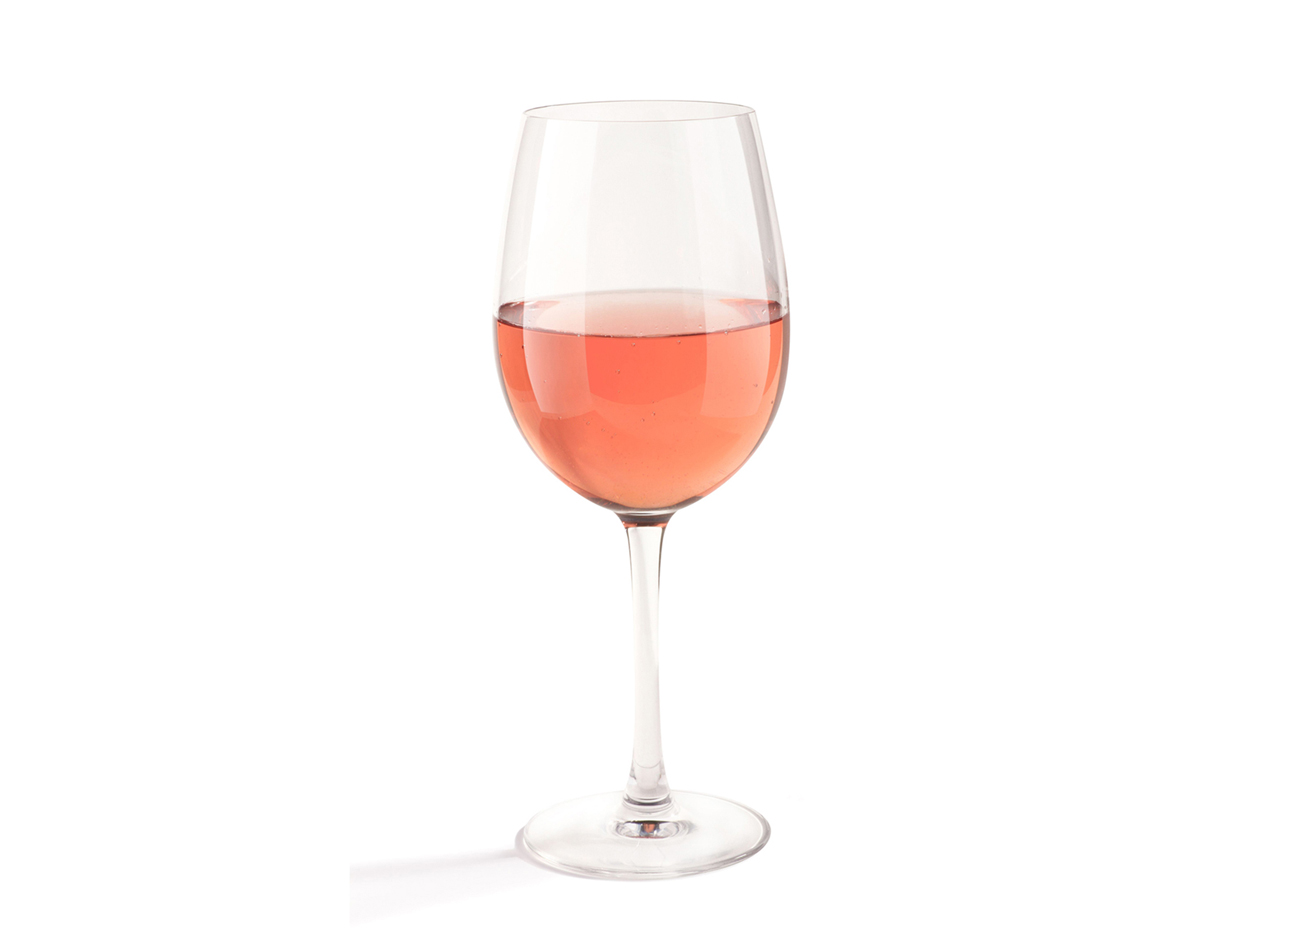 Rose in white wine glass